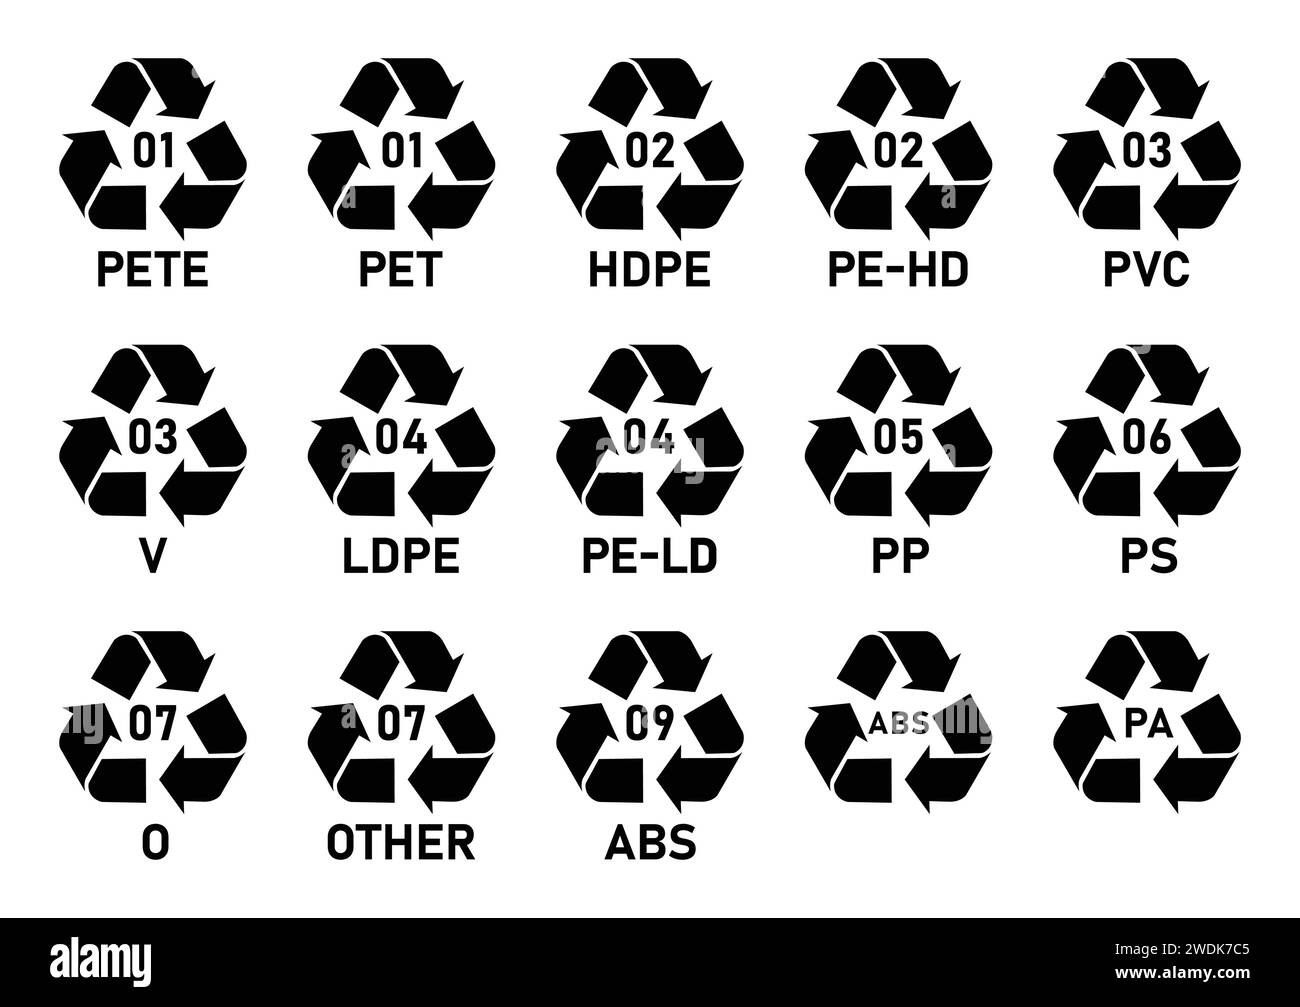 Symbolsatz für alle Recycling-Codes aus Kunststoff. Symbole für Recycling-Codes aus Mobius-Streifen aus Kunststoff isoliert. Recycling-Codes aus Kunststoff: 01 PET, 02 HDPE, 03 PVC, 07 SONSTIGES. Stock Vektor